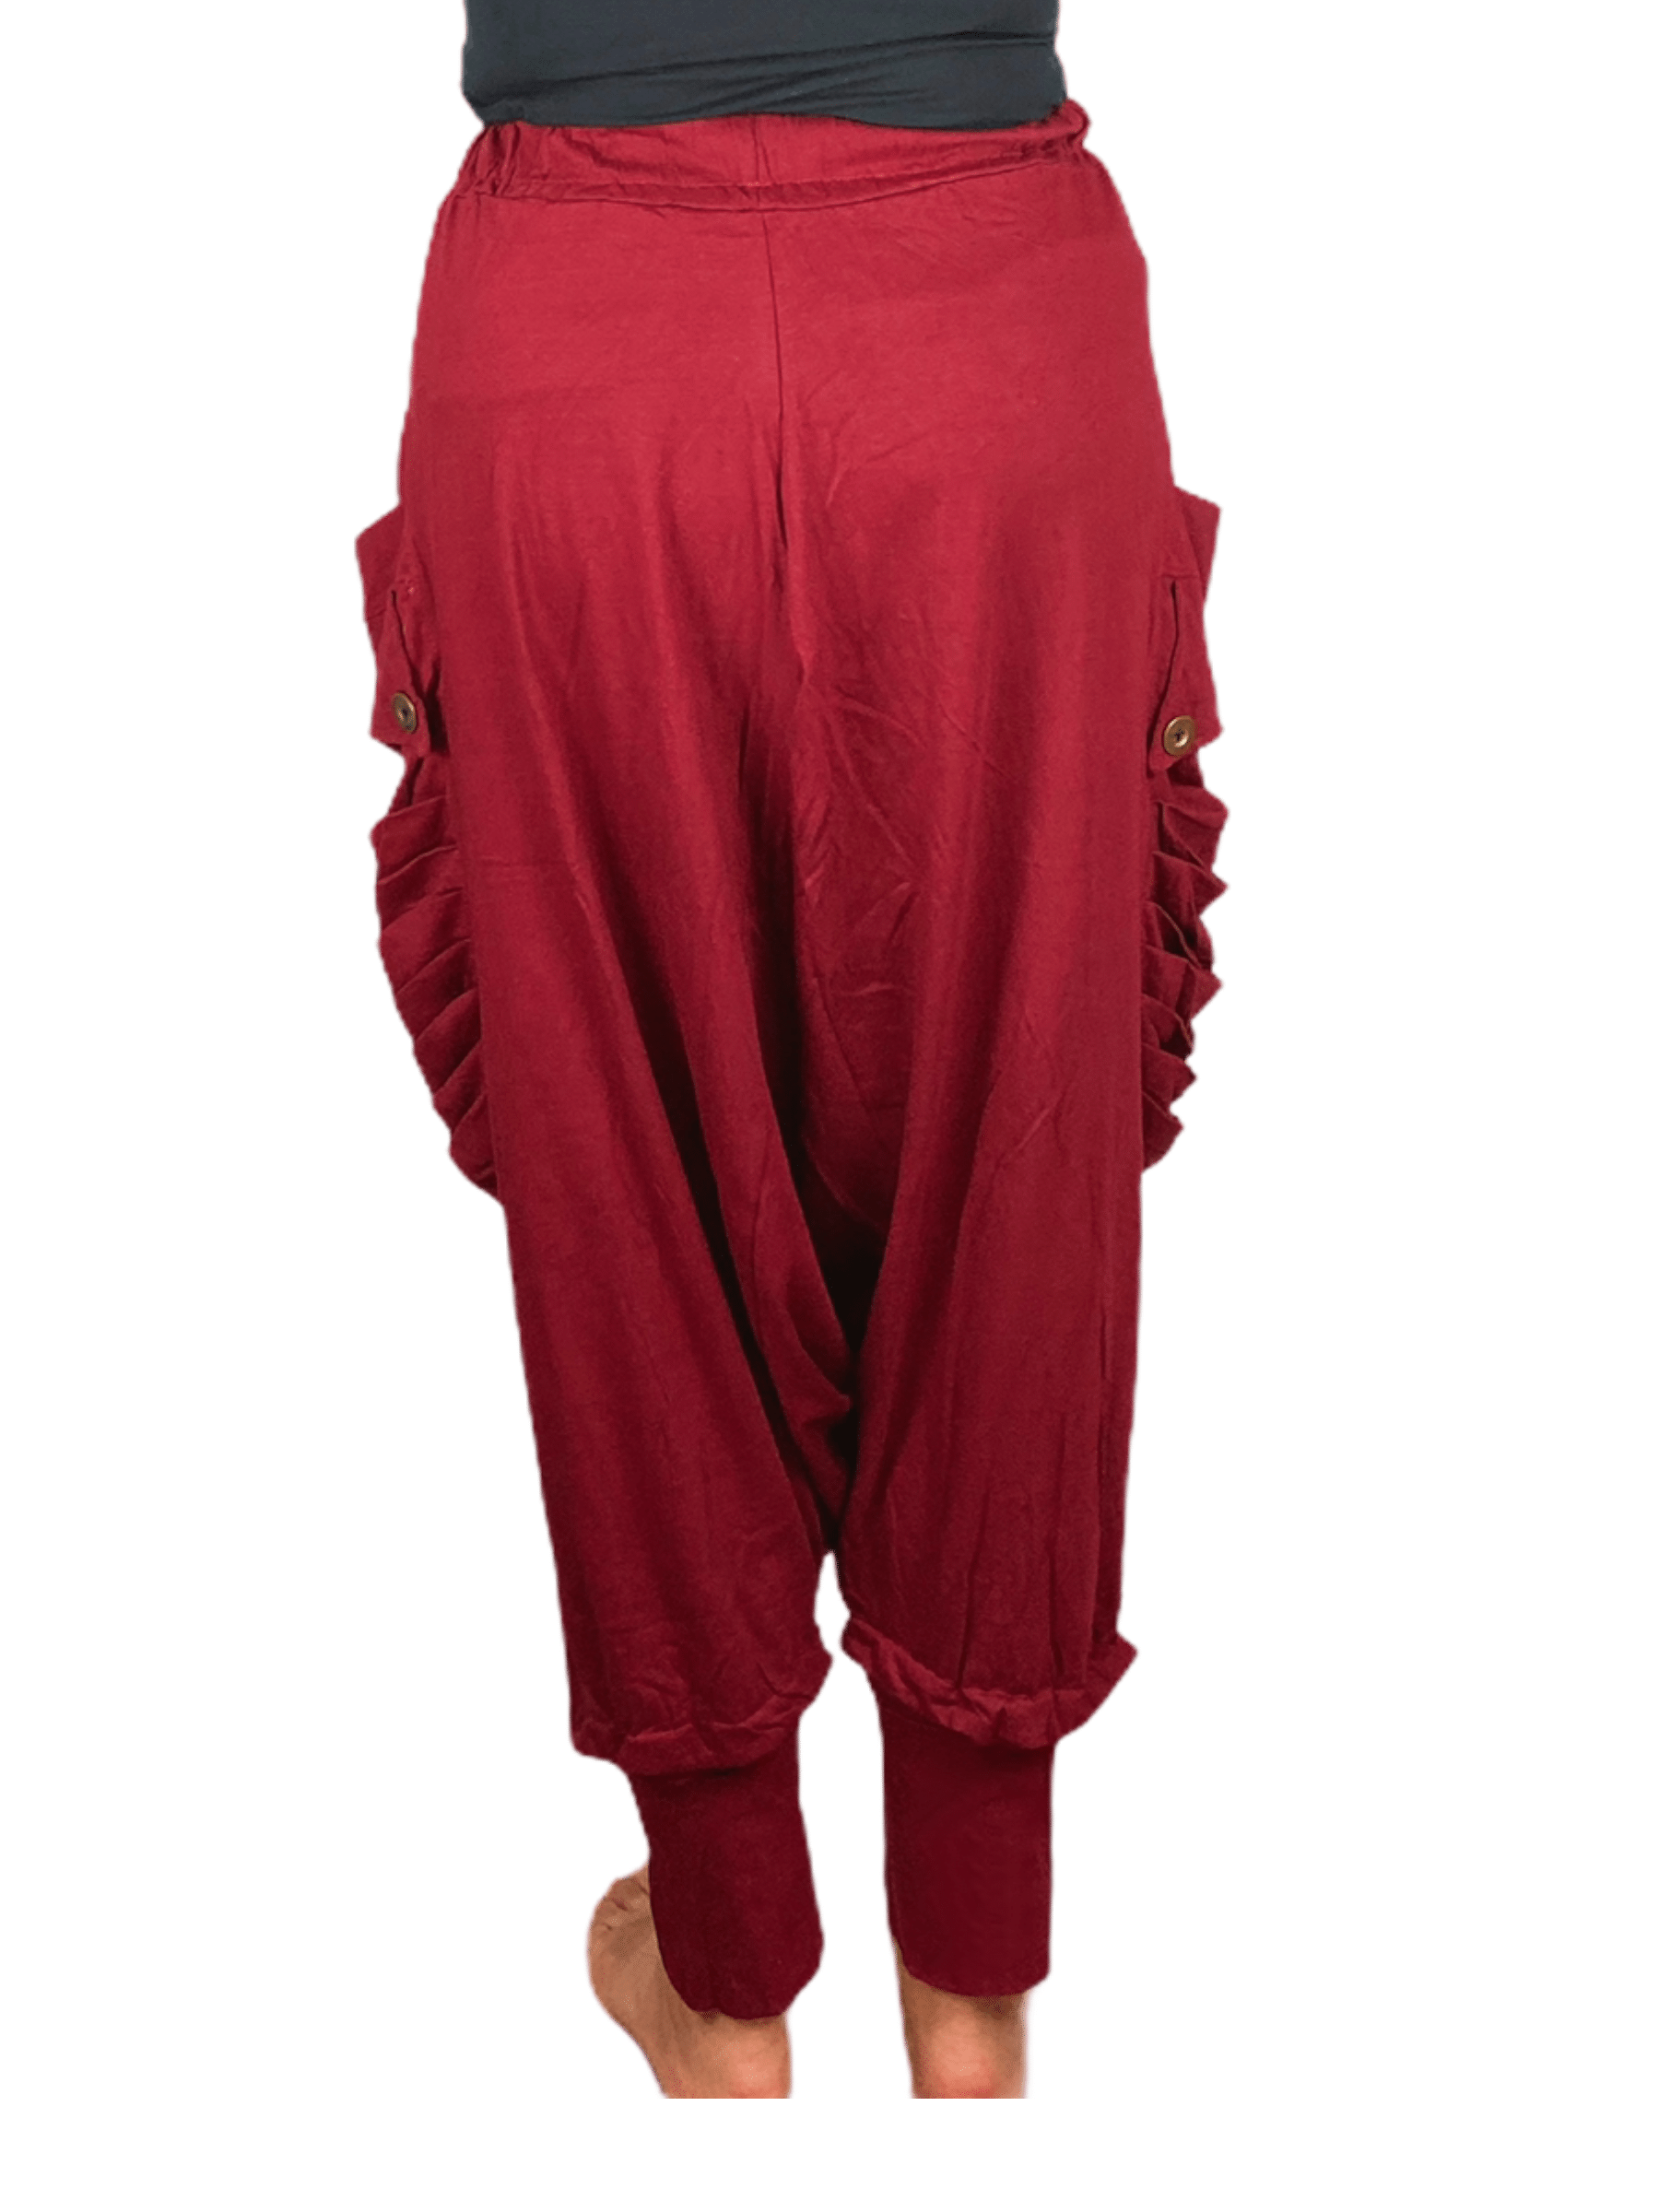 Wine Cotton Loose-Fitting Harem Pants